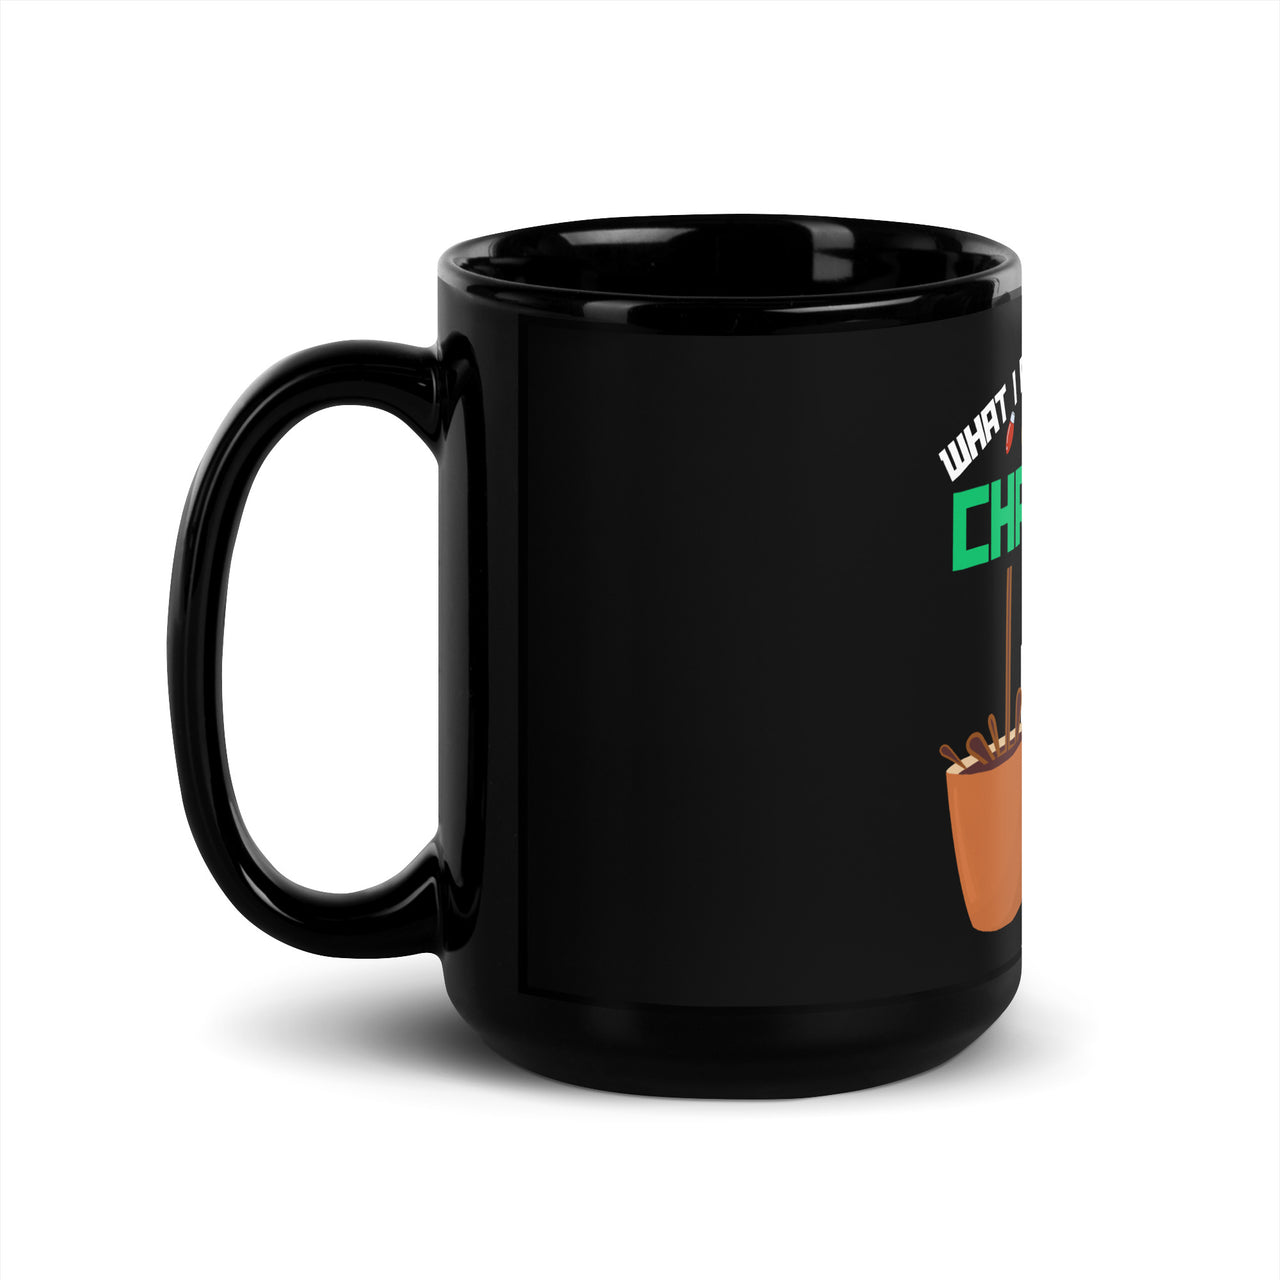 Self-Refilling Coffee Cup Black Mug